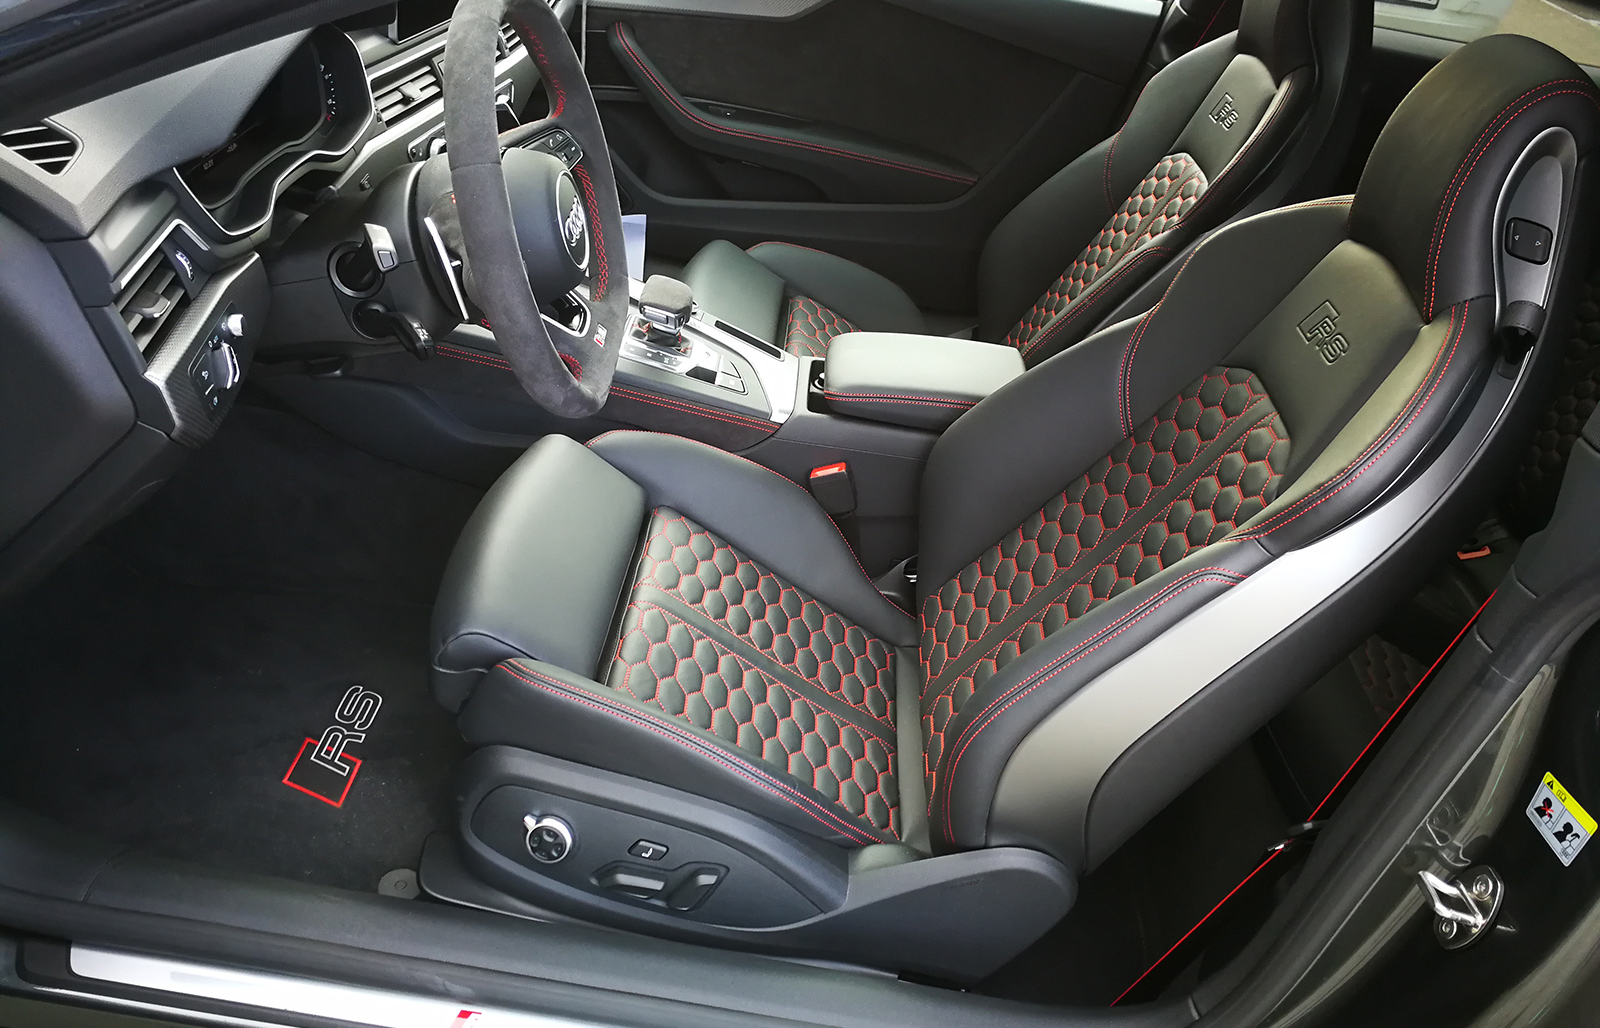 Audi RS5 i testet hos CPA